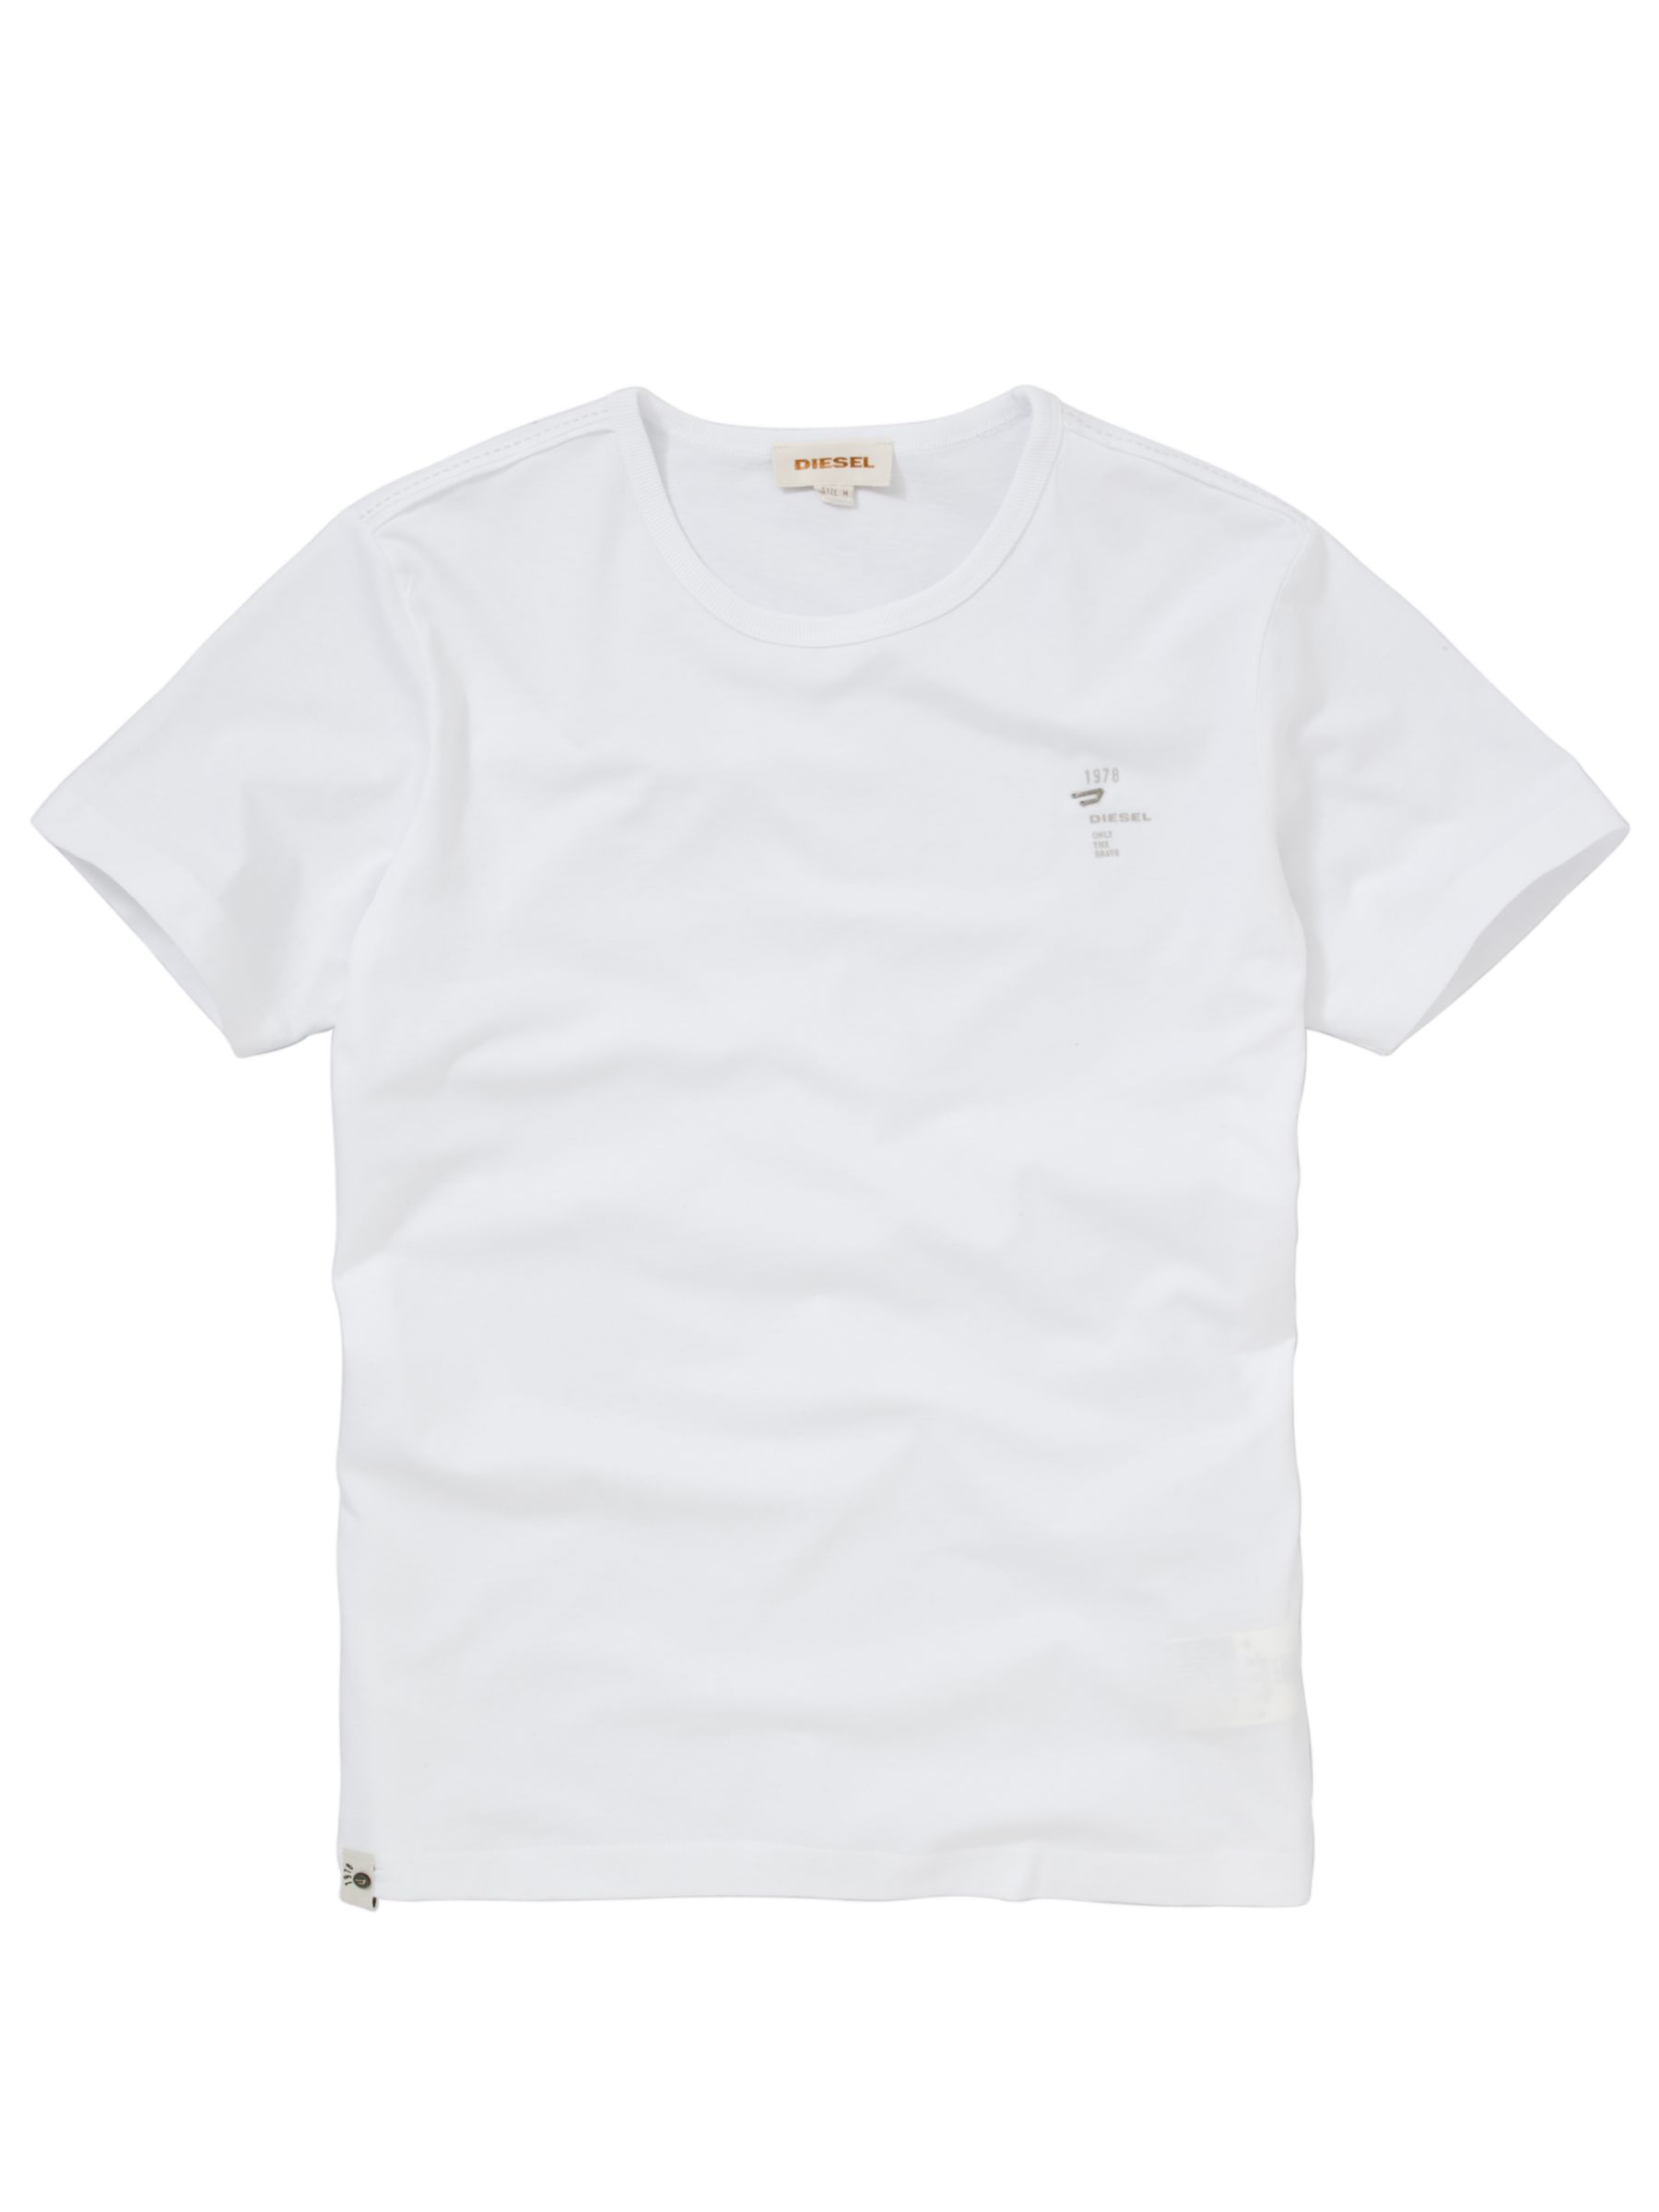 T-Calor Basic Short-Sleeve T-Shirt, White